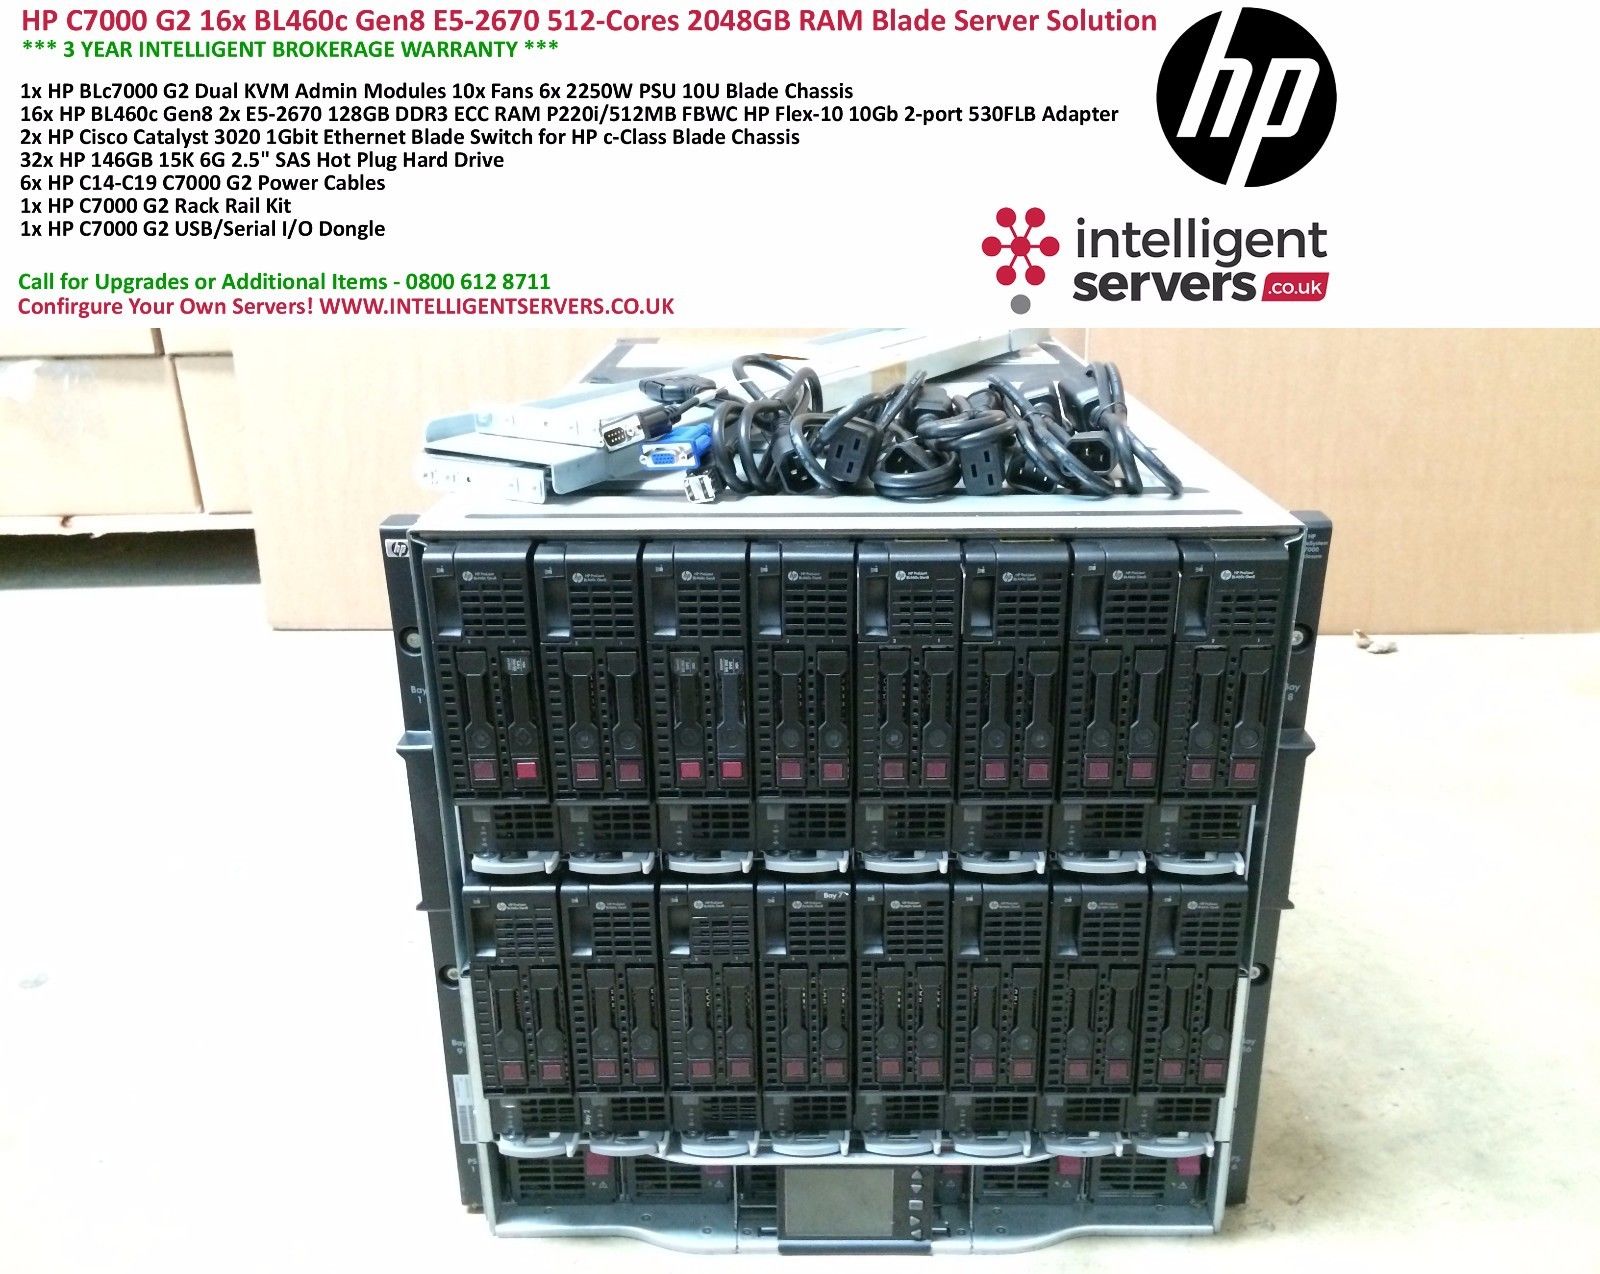 HP-C7000-G2-16x-HP-BL460c-Gen8-512-Cores.jpg